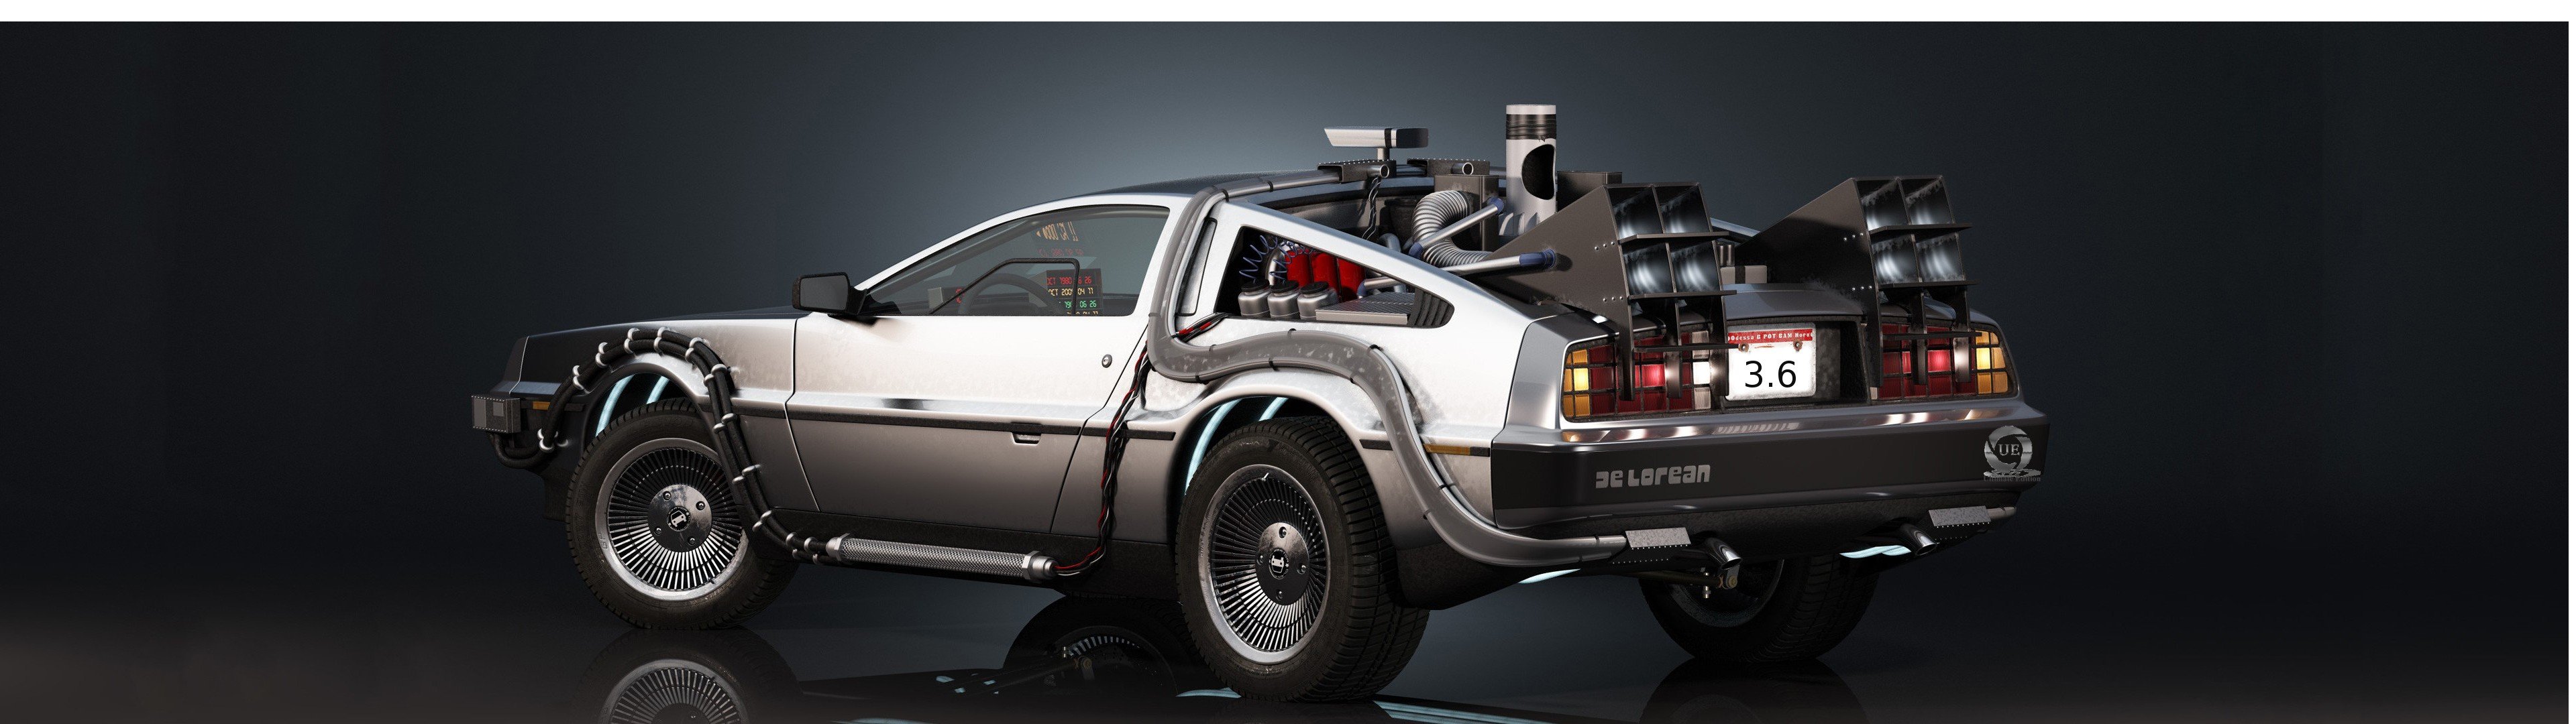 DMC DeLorean, DeLorean, Back to the Future, Car, Dual monitors, Multiple display Wallpaper